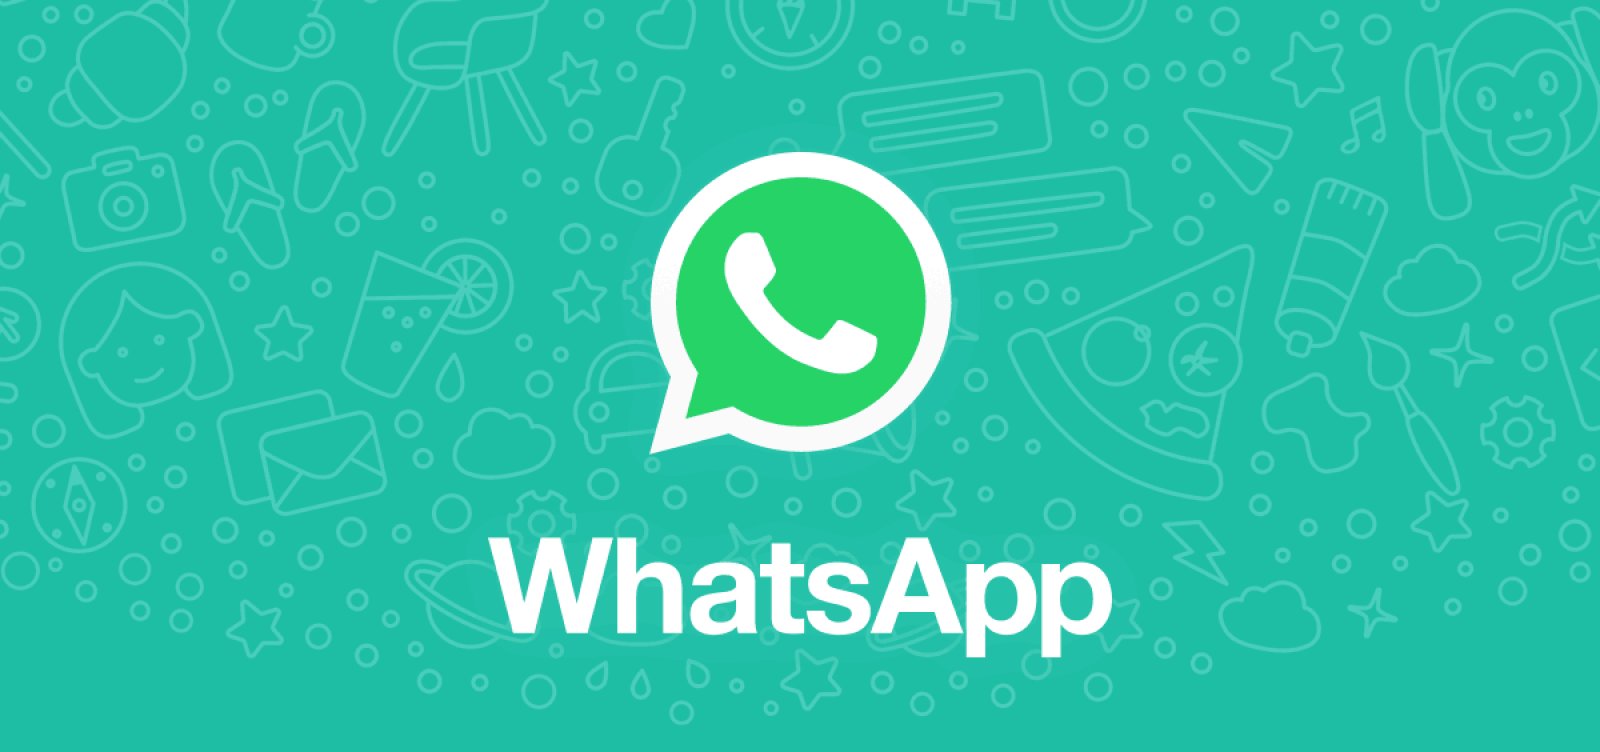 WhatsApp apresenta problemas de funcionamento neste domingo